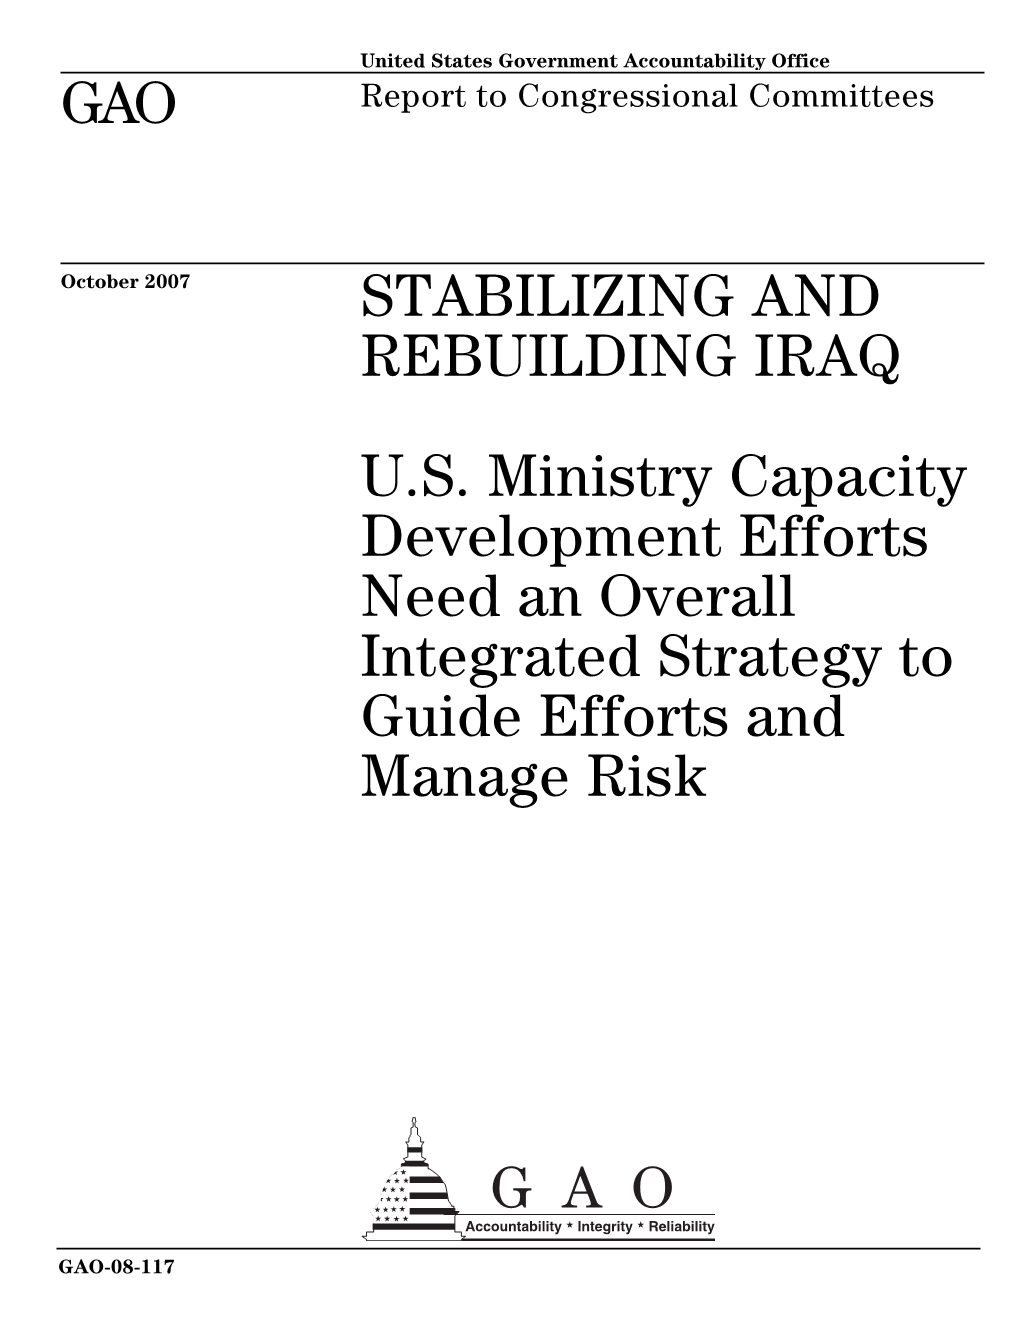 GAO-08-117 Stabilizing and Rebuilding Iraq: U.S. Ministry Capacity